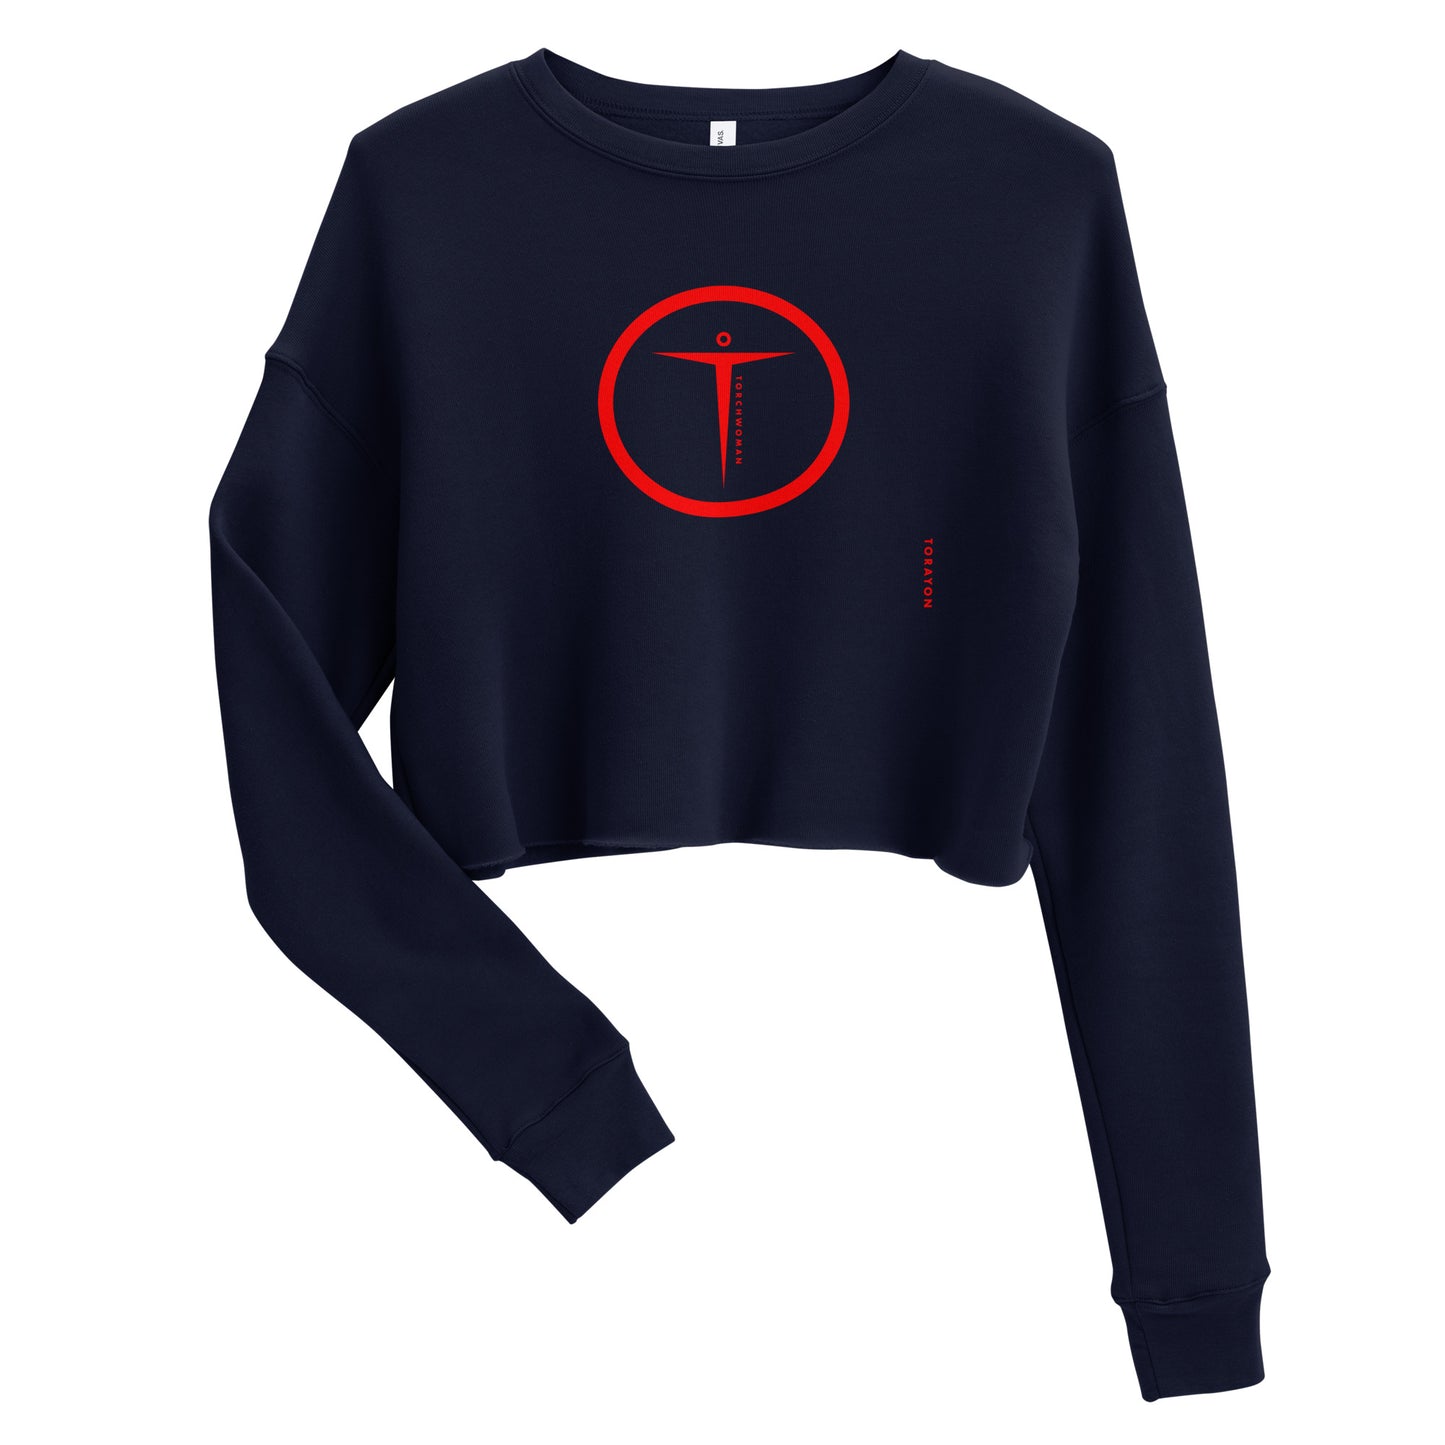 TORAYON Halo (R) Crop Sweatshirt